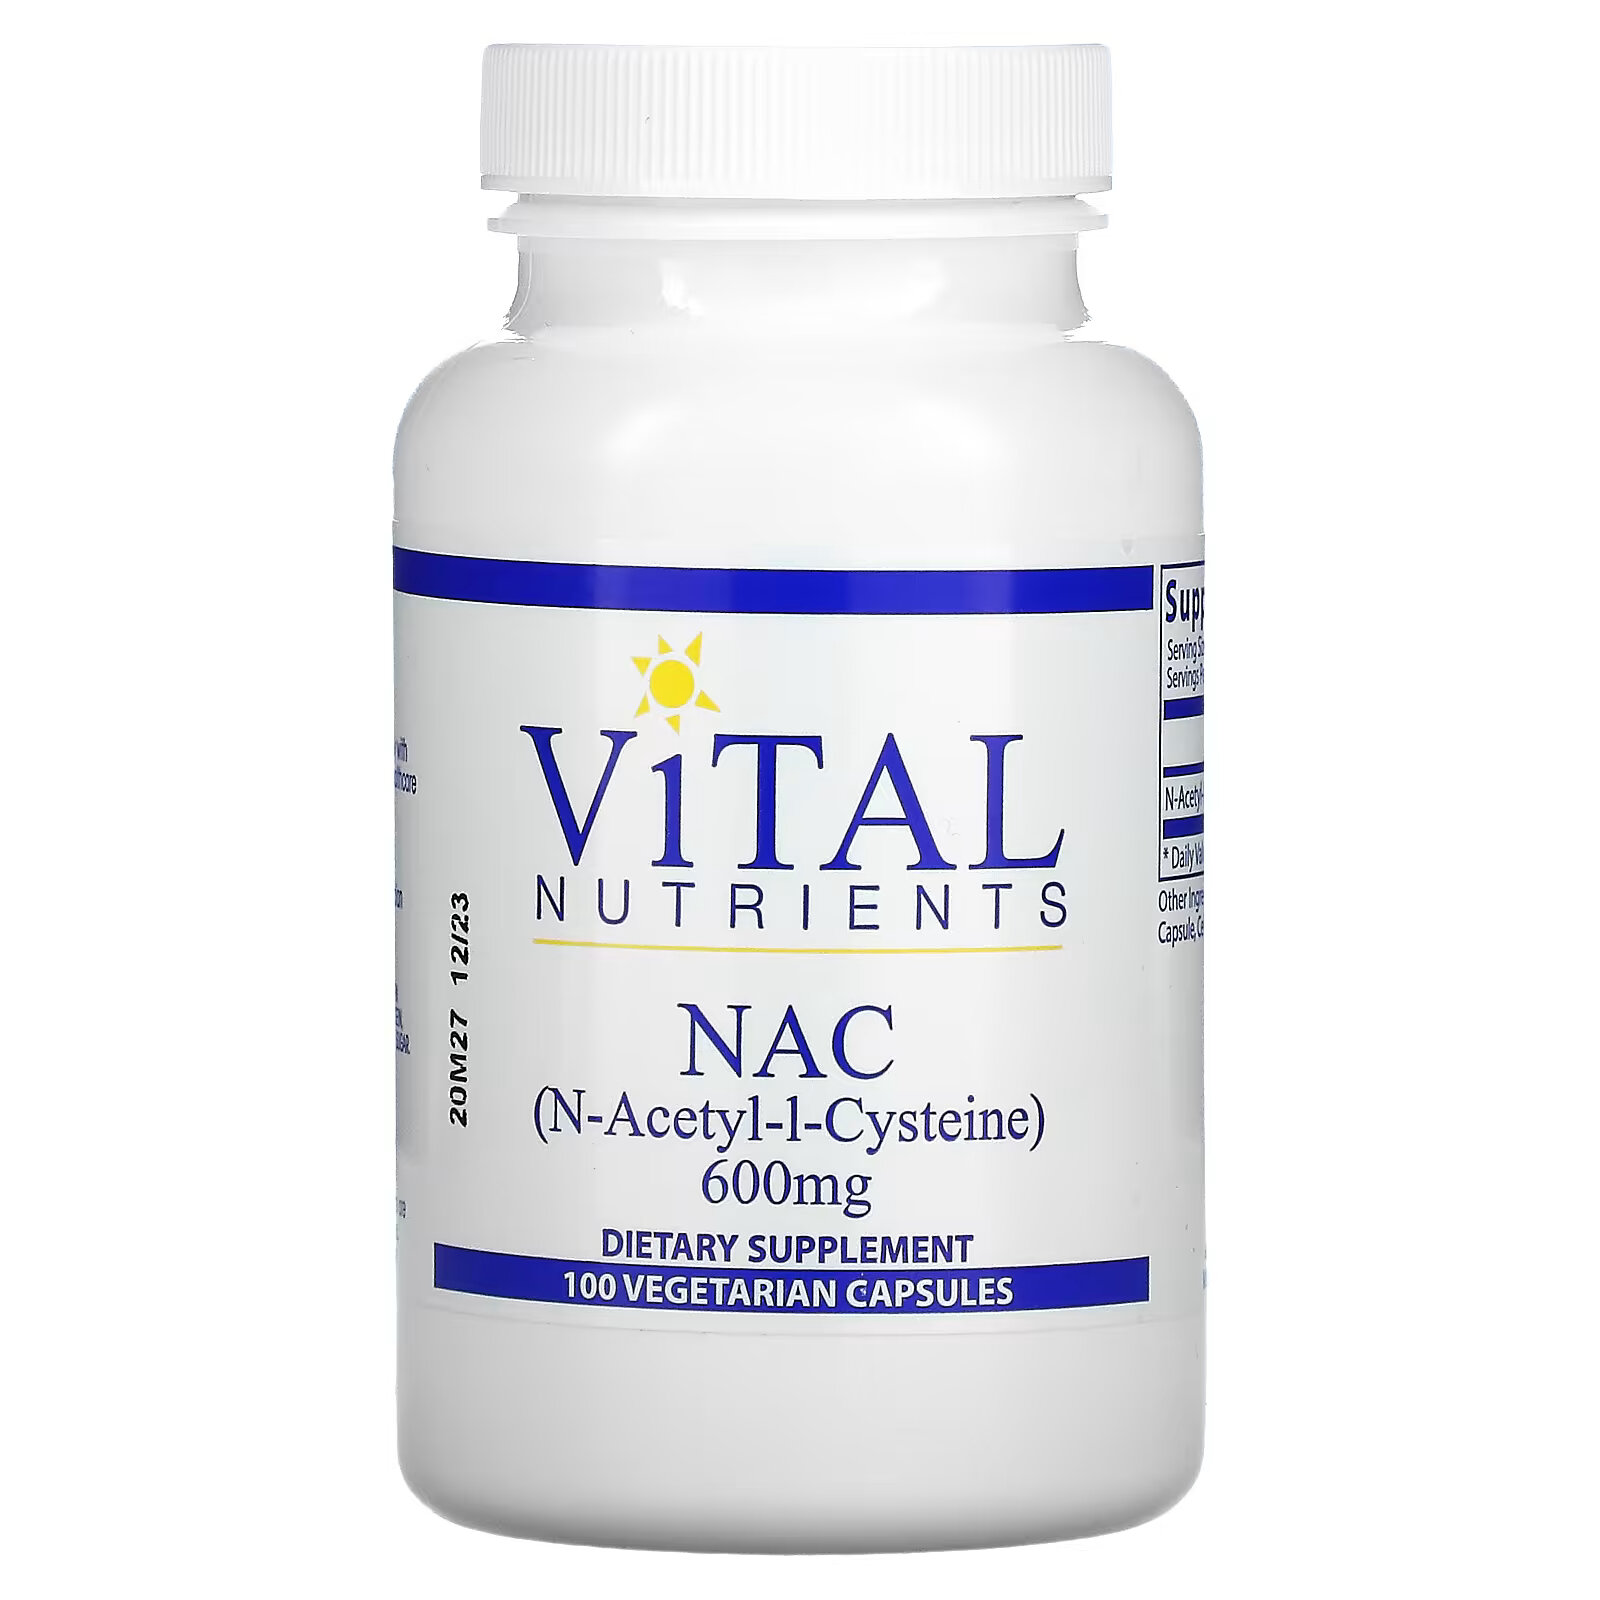 Vital Nutrients, N-ацетил-L-цистеин, 600 мг, 100 вегетарианских капсул protocol for life balance nac n ацетил цистеин 600 мг 100 вегетарианских капсул